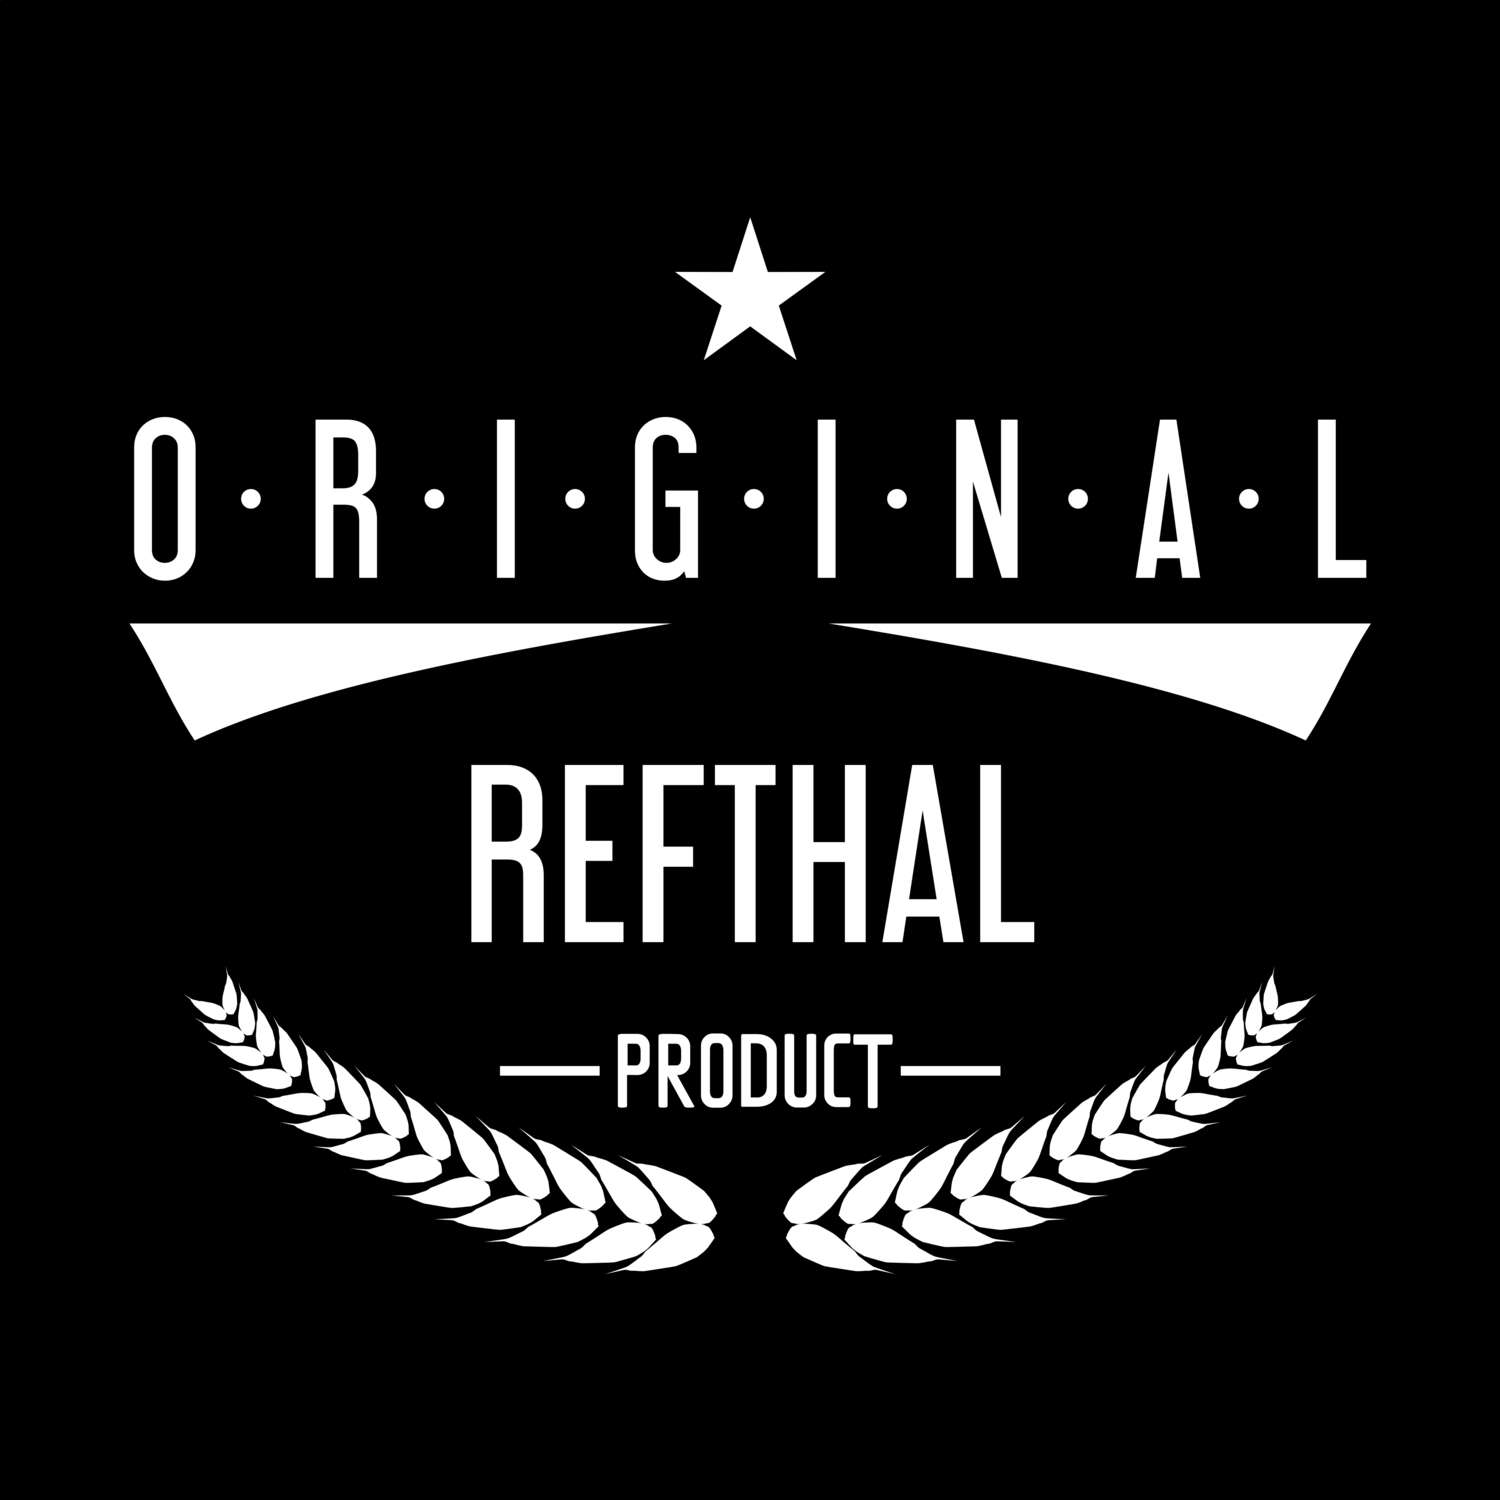 Refthal T-Shirt »Original Product«